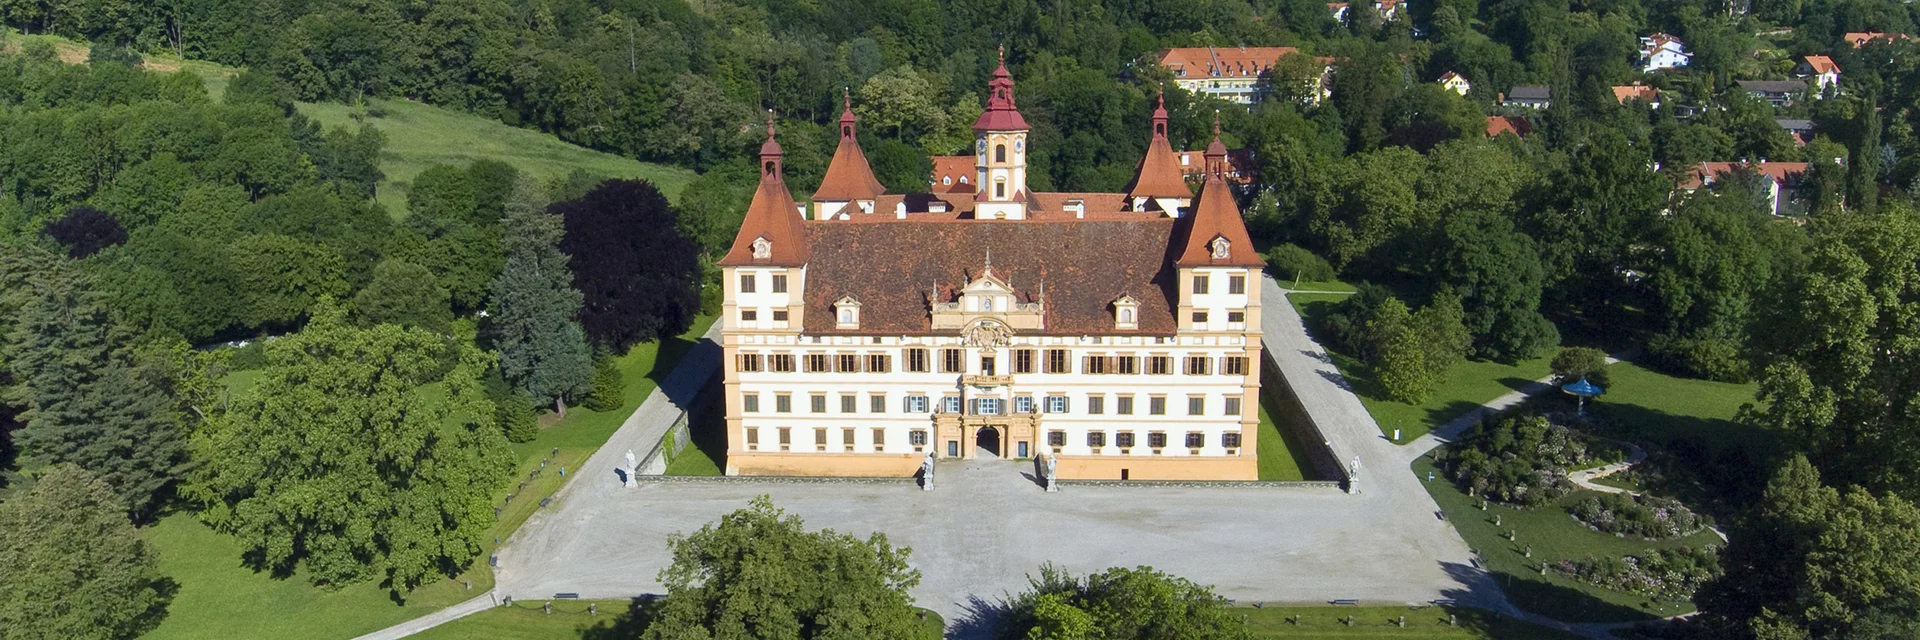 UNESCO World Heritage Schloss Eggenberg castle | © Universalmuseum Joanneum / zepp®cam.at | Zepp@Cam